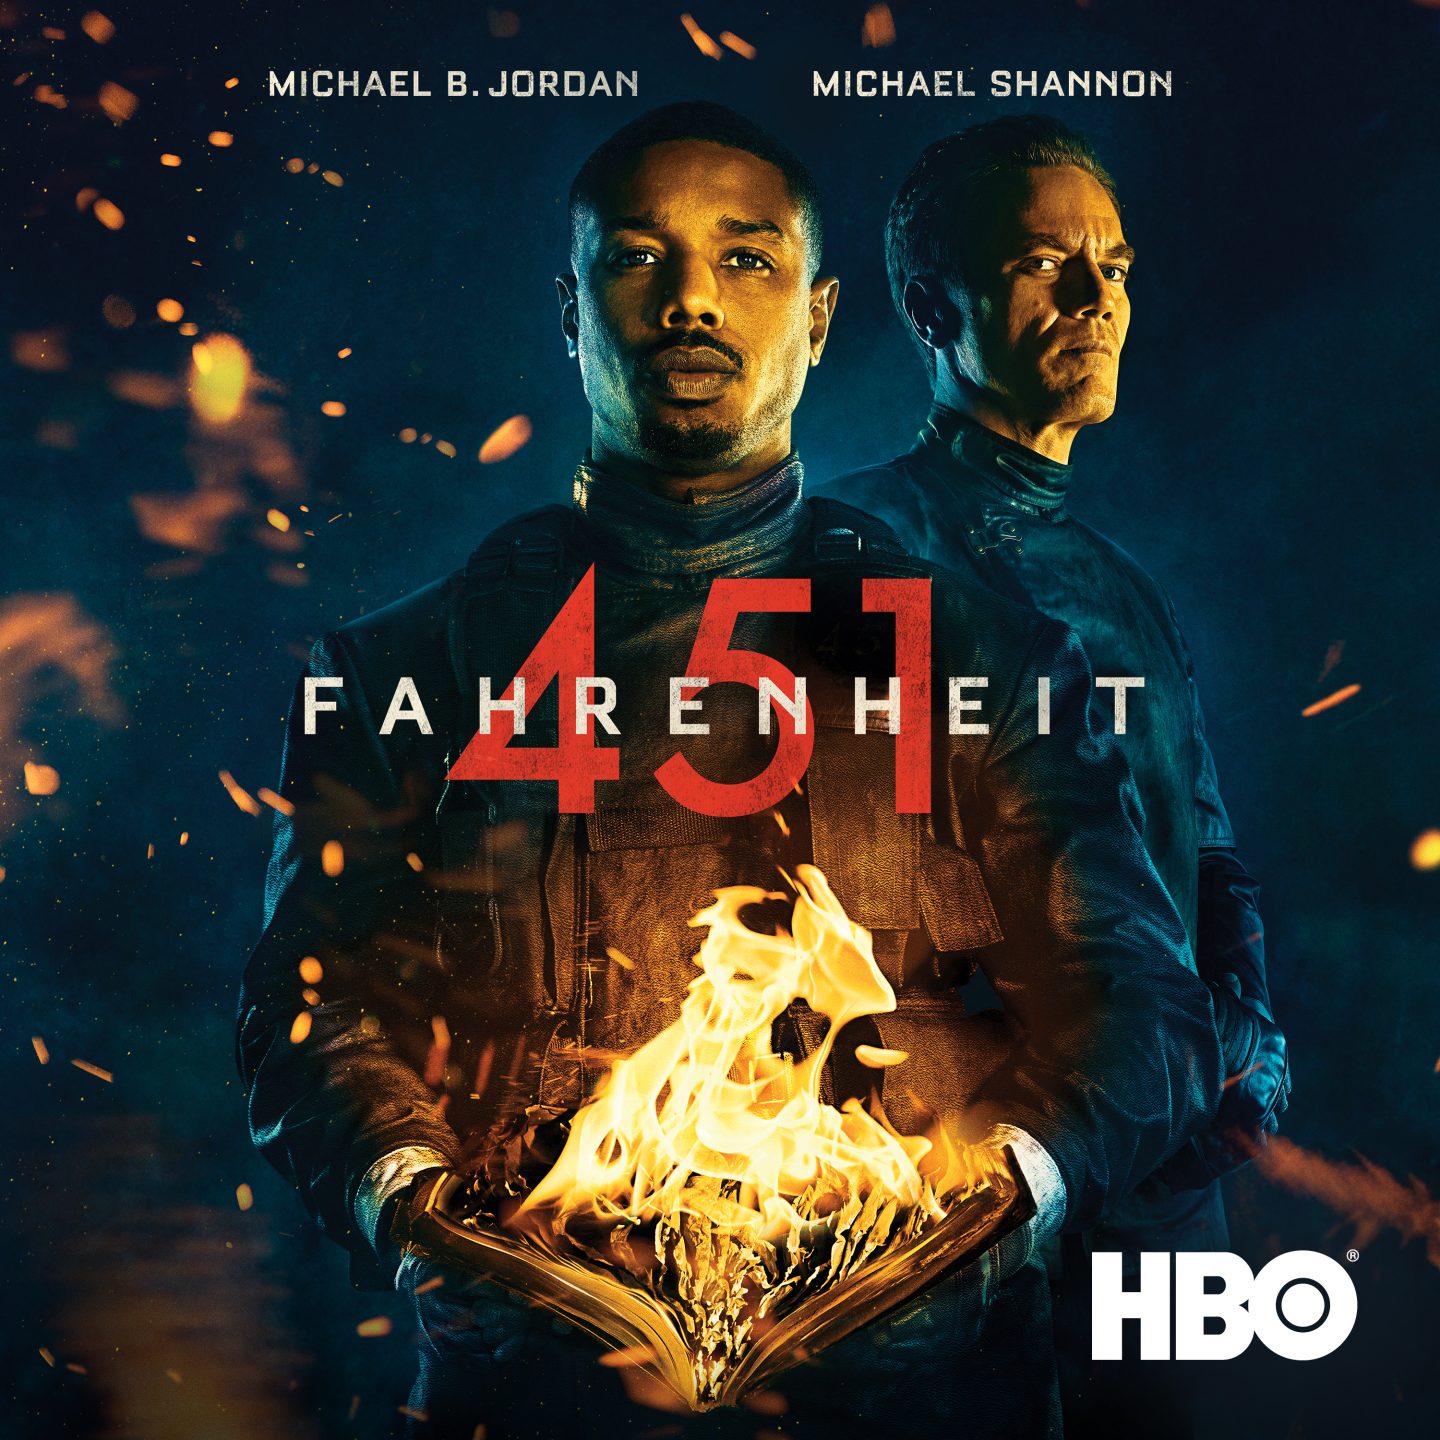 Fahrenheit 451 cover (HBO)